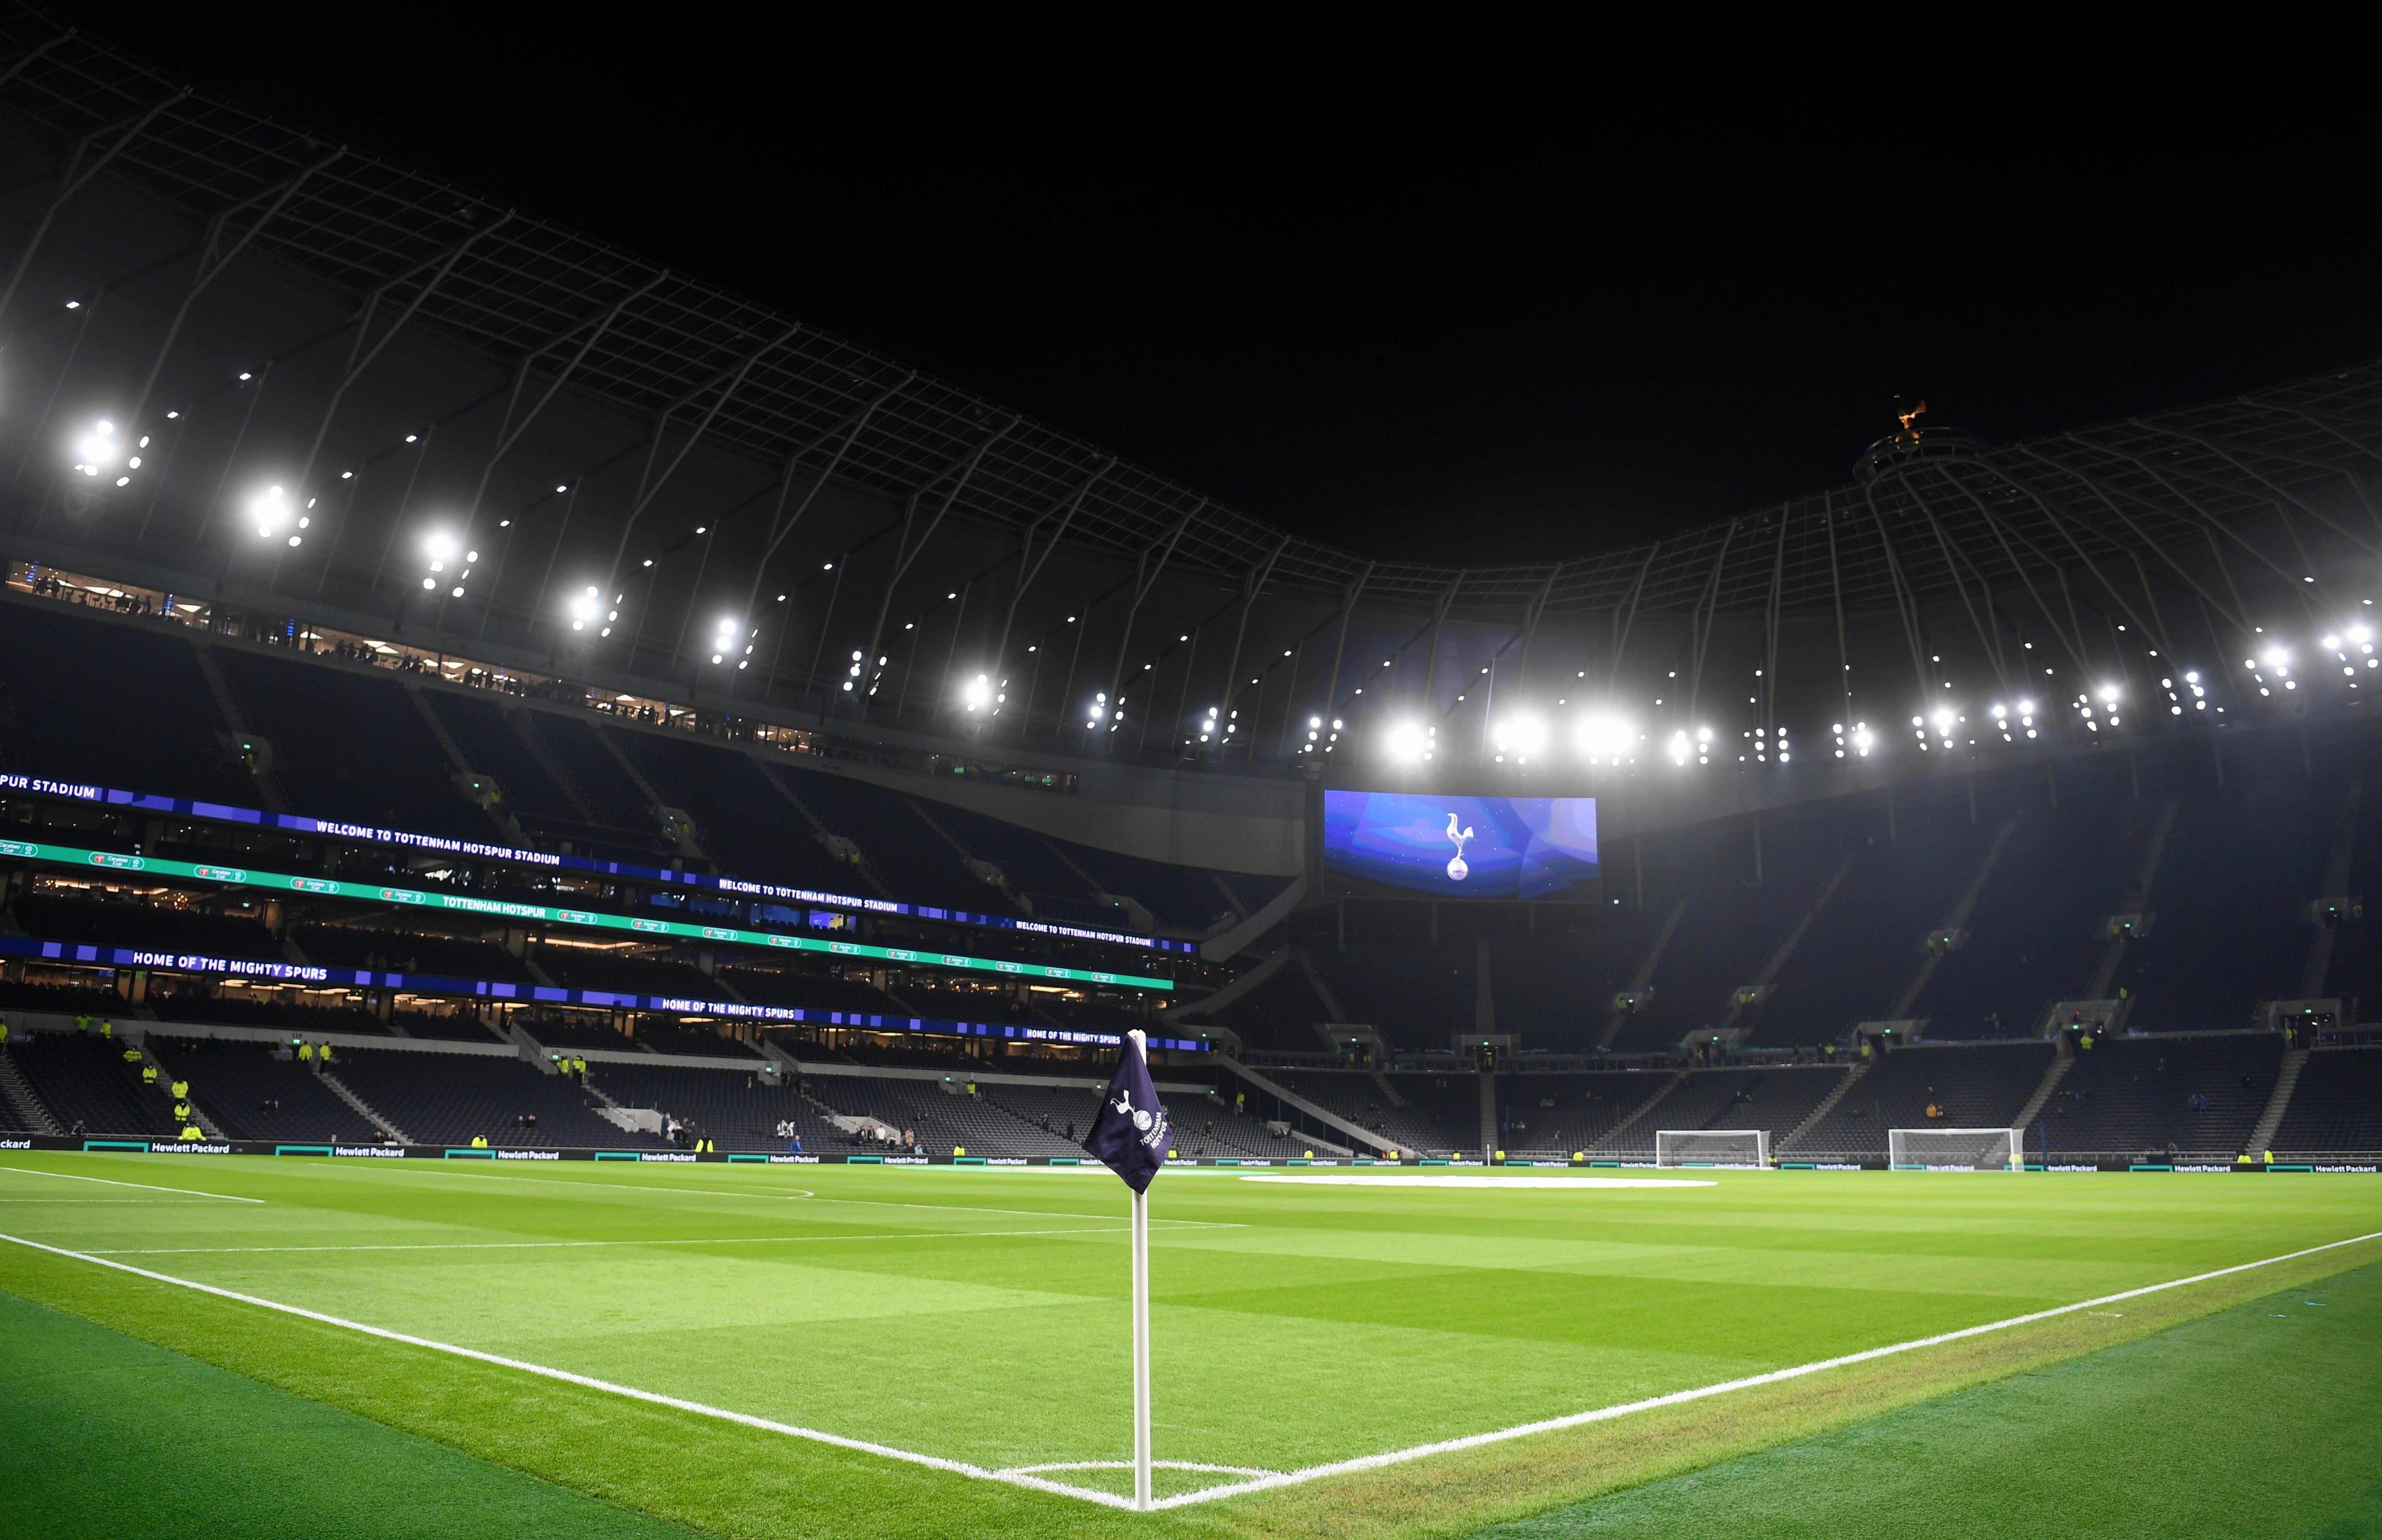 Tottenham Hotspur Stadium will not host Arsenal this weekend